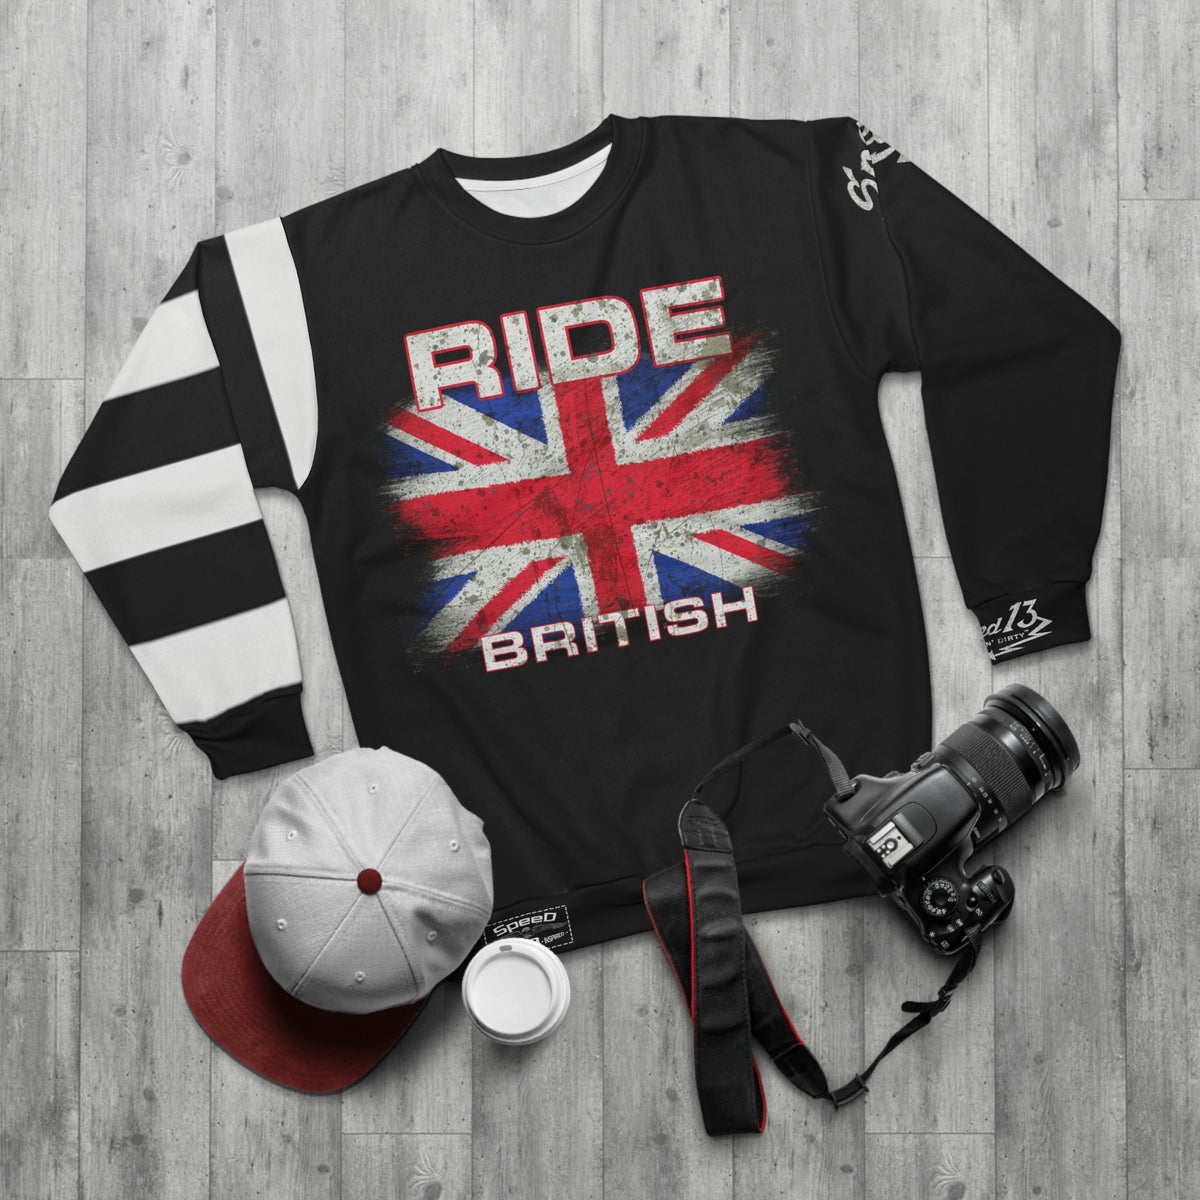 🏁 Ride British 🏁